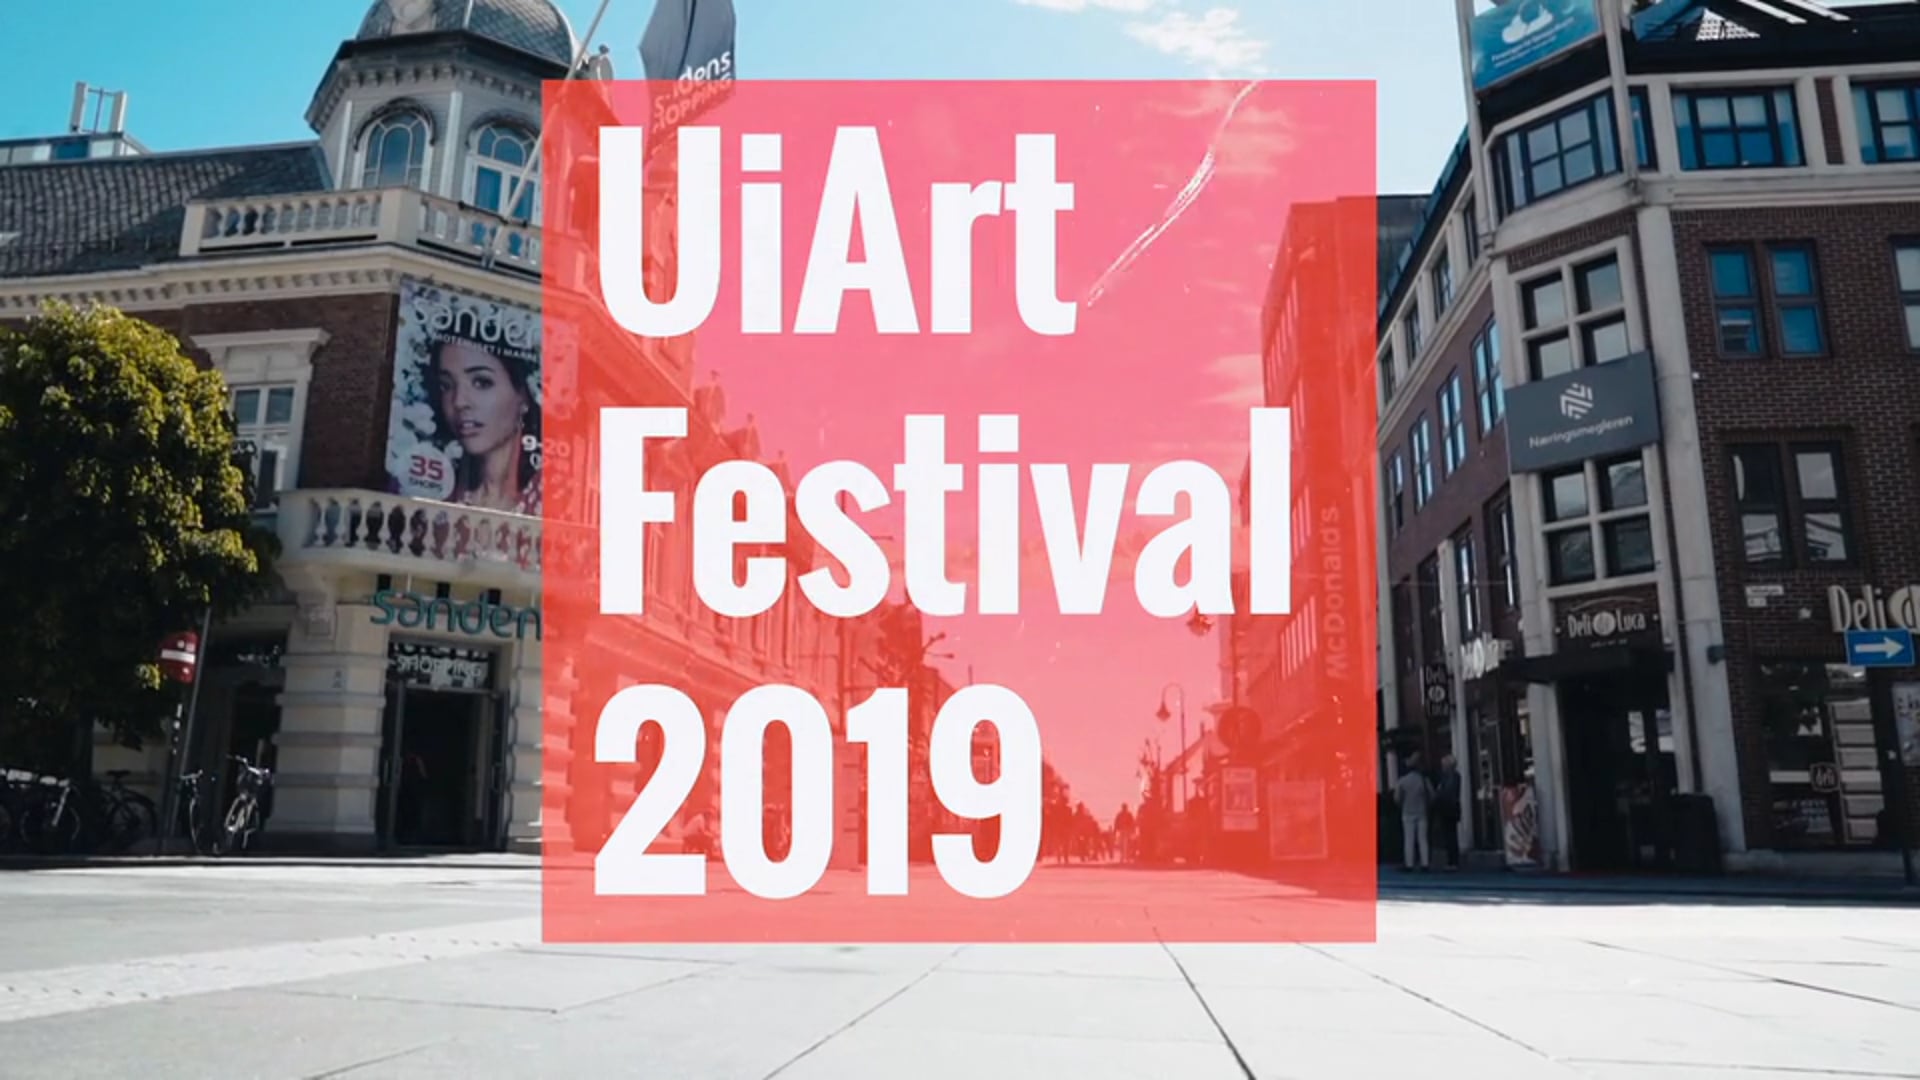 UiArt Festival - Aftermovie